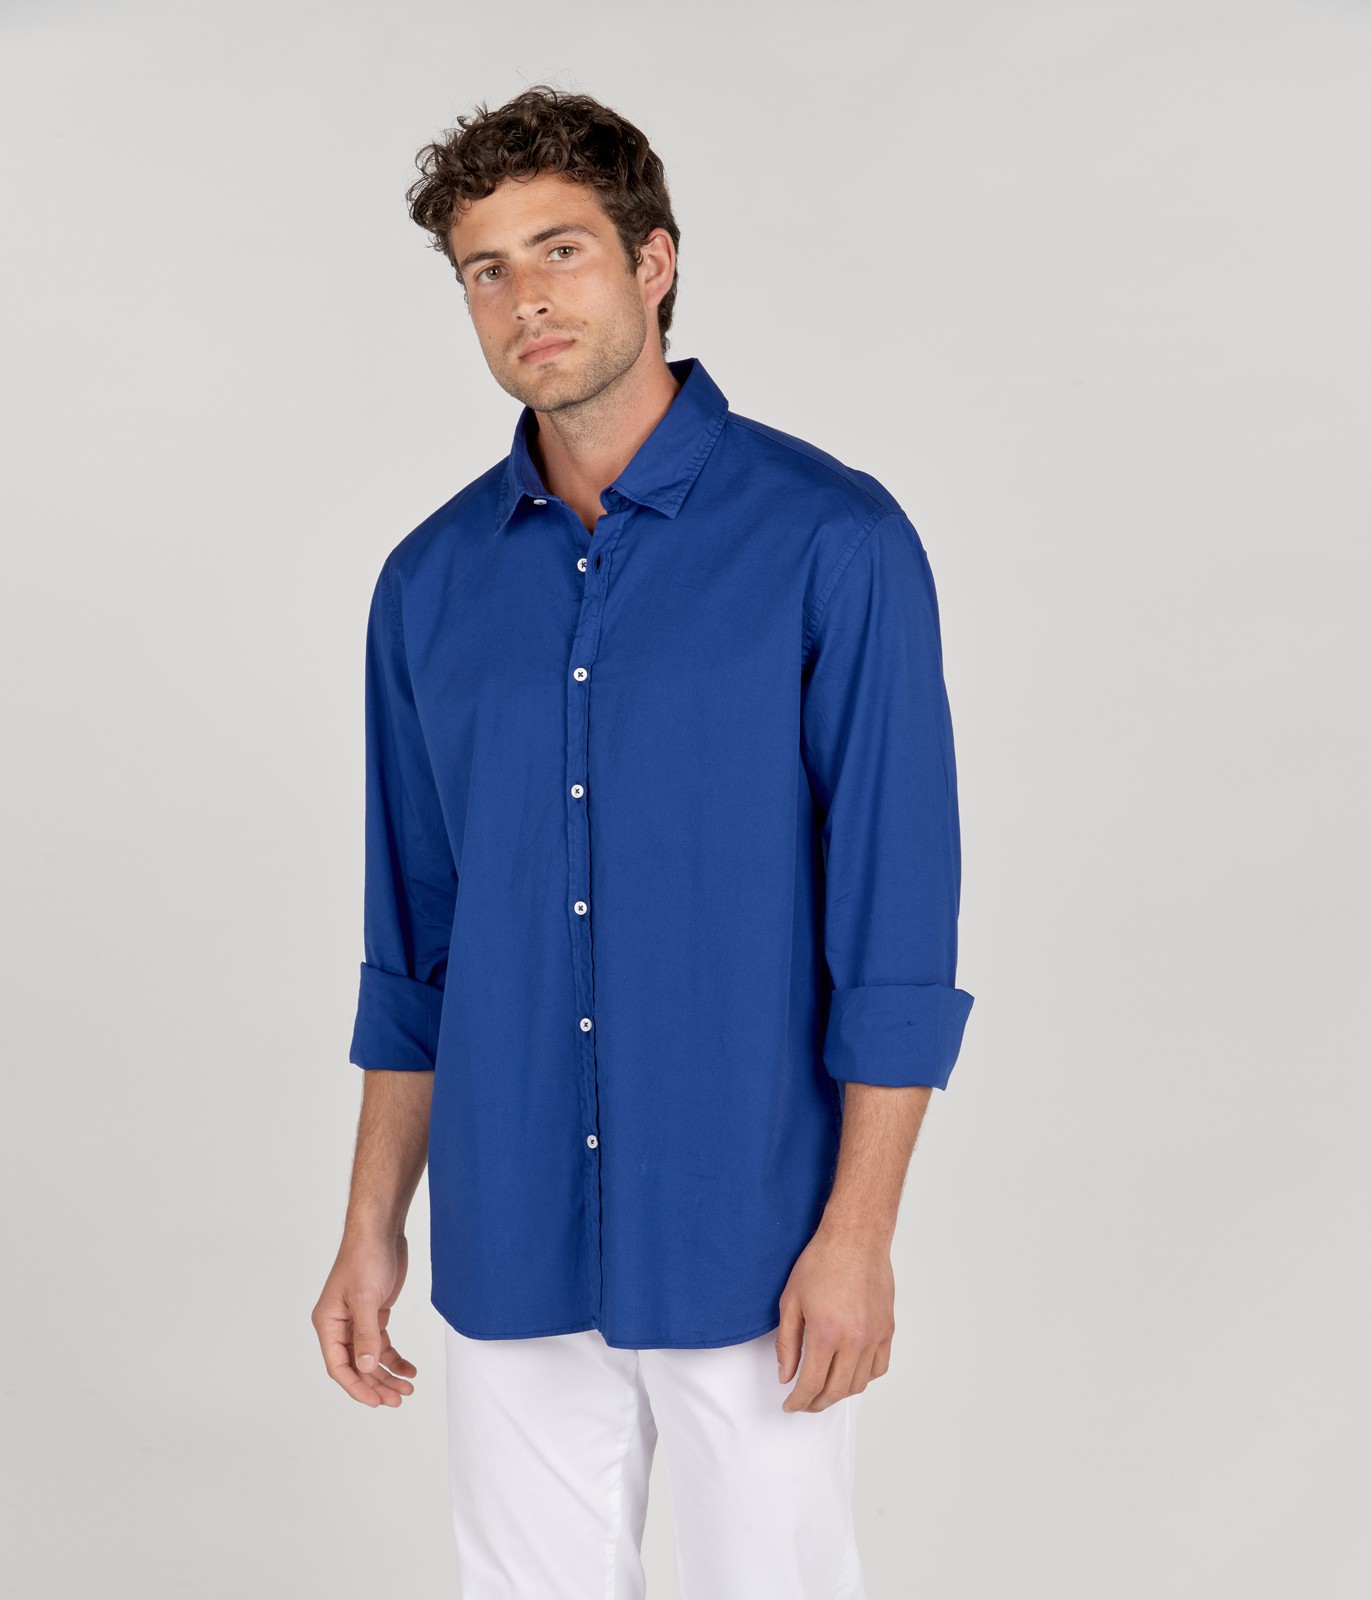 for indigo Quality shirt brand color long men sleeves Plain Europann